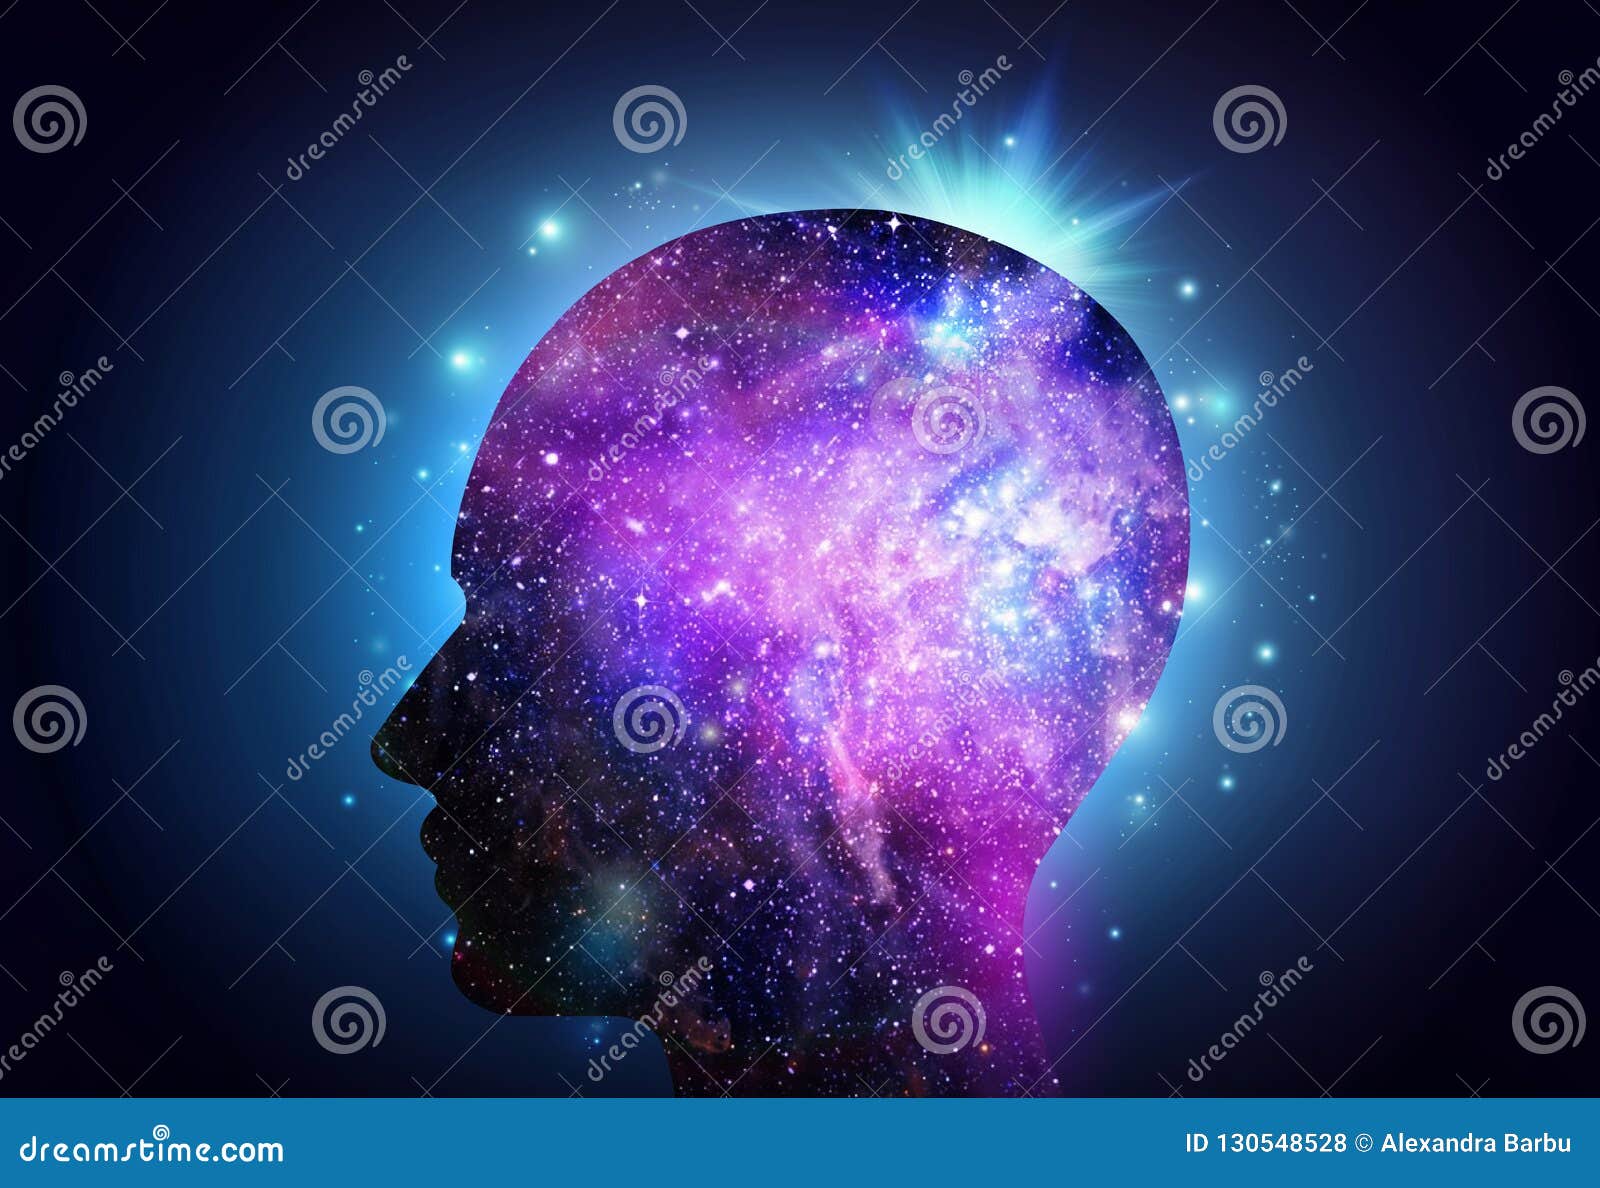 human head universe inspiration enlightenment